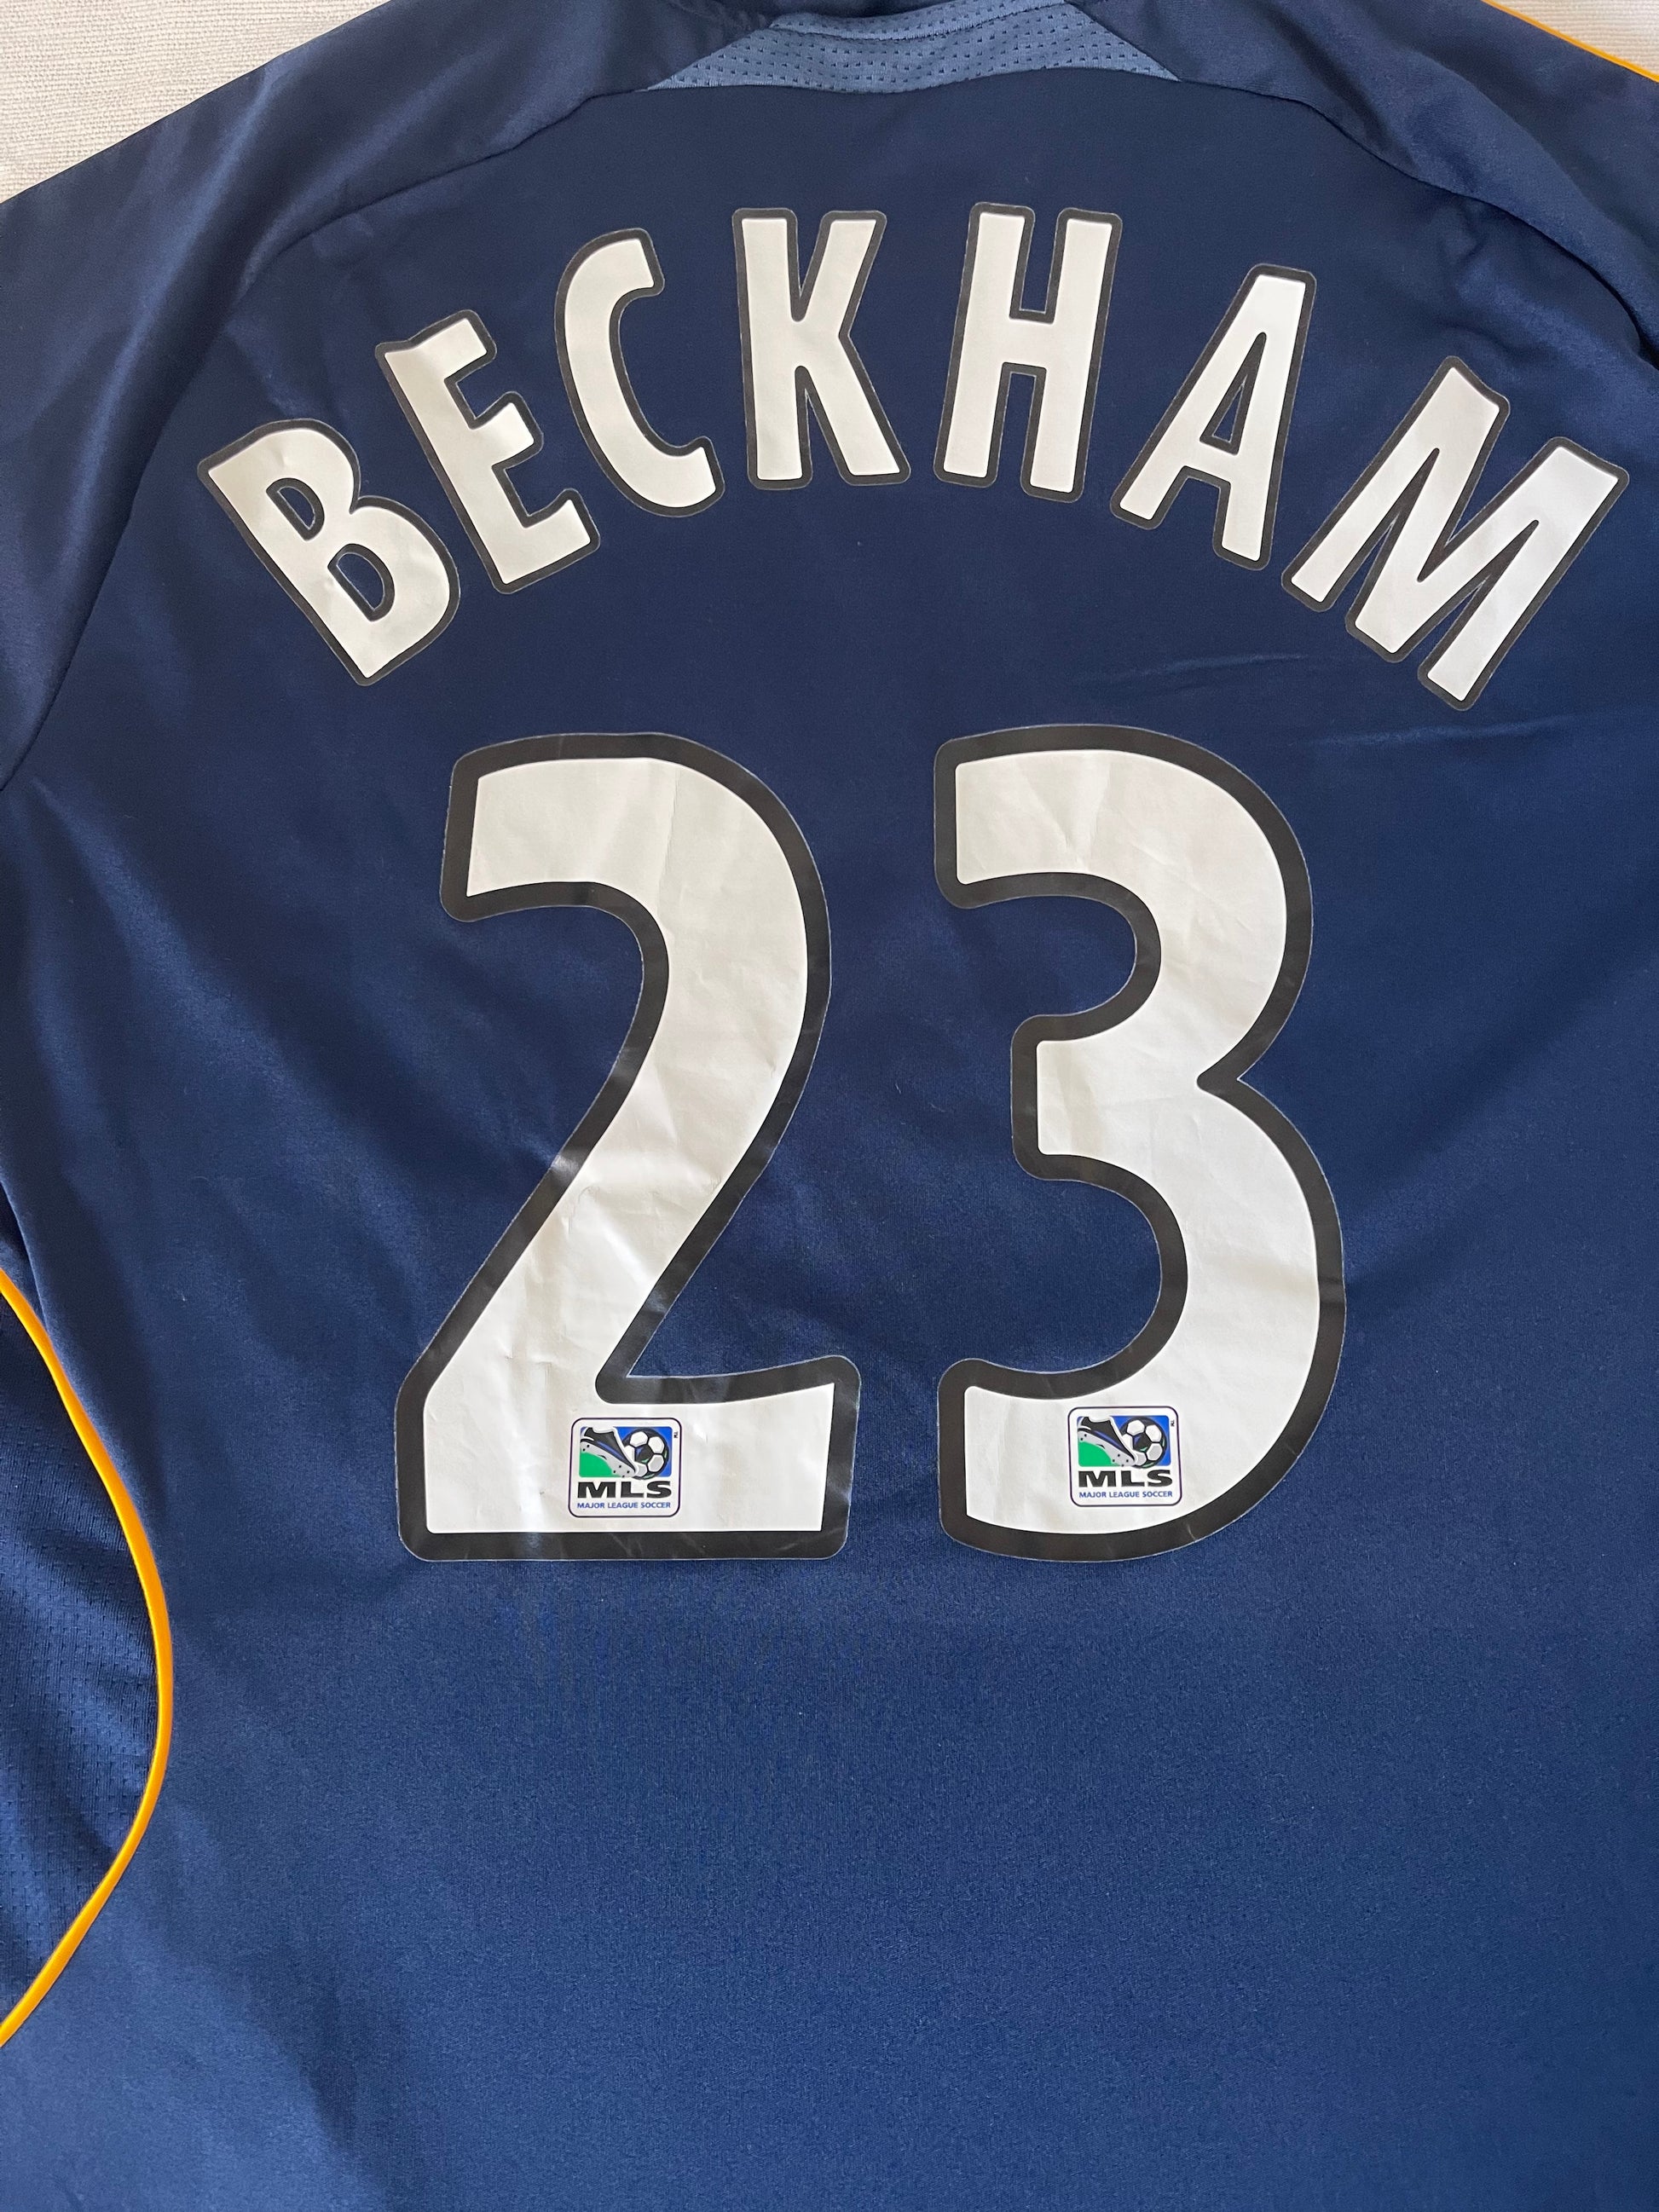 David Beckham LA Galaxy Adidas 2007-2008 Away Football Shirt MLS Herbalife ClimaCool Size M Blue